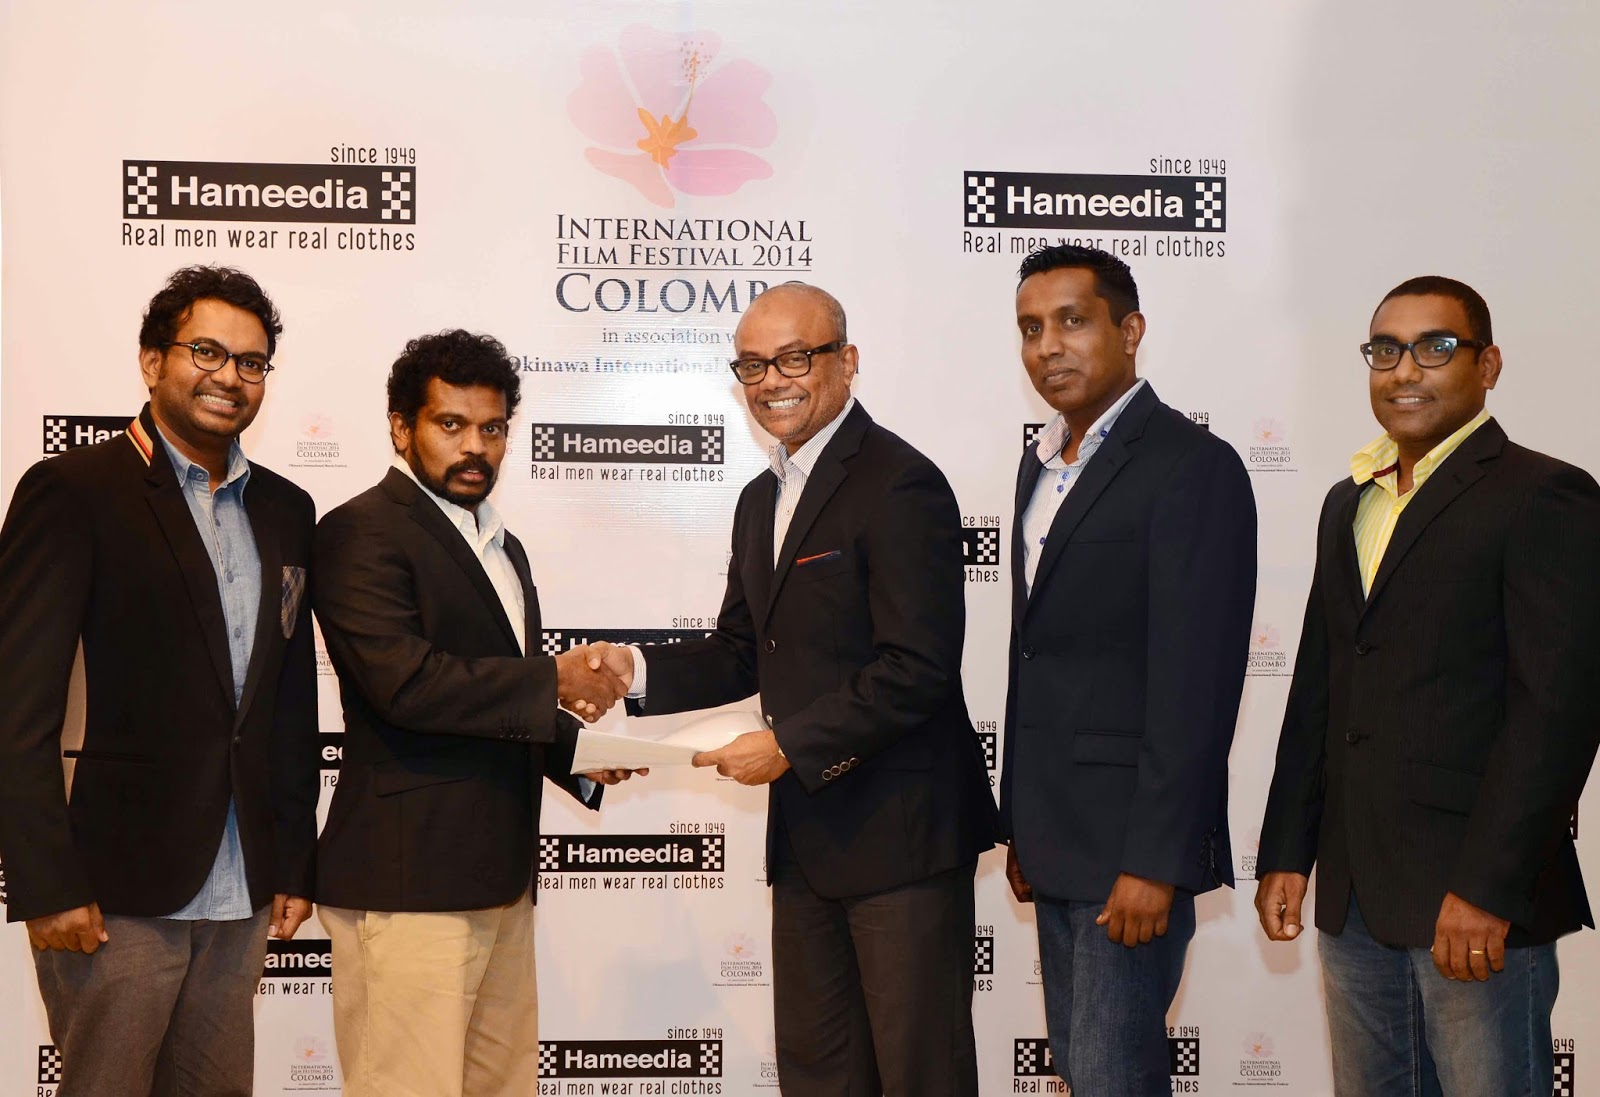 Standing from left to right - Vimukthi Jayasundara, Film Director; Asoka Handhagama, Director, IFFC; Fouzul Hameedia, Managing Director, Hameedia; Yasotharan Paramanantham, Head of Retail Sales and Marketing, Hameedia; and Ramasamy Balakumar; Manager Advertising and Promotions, Hameedia